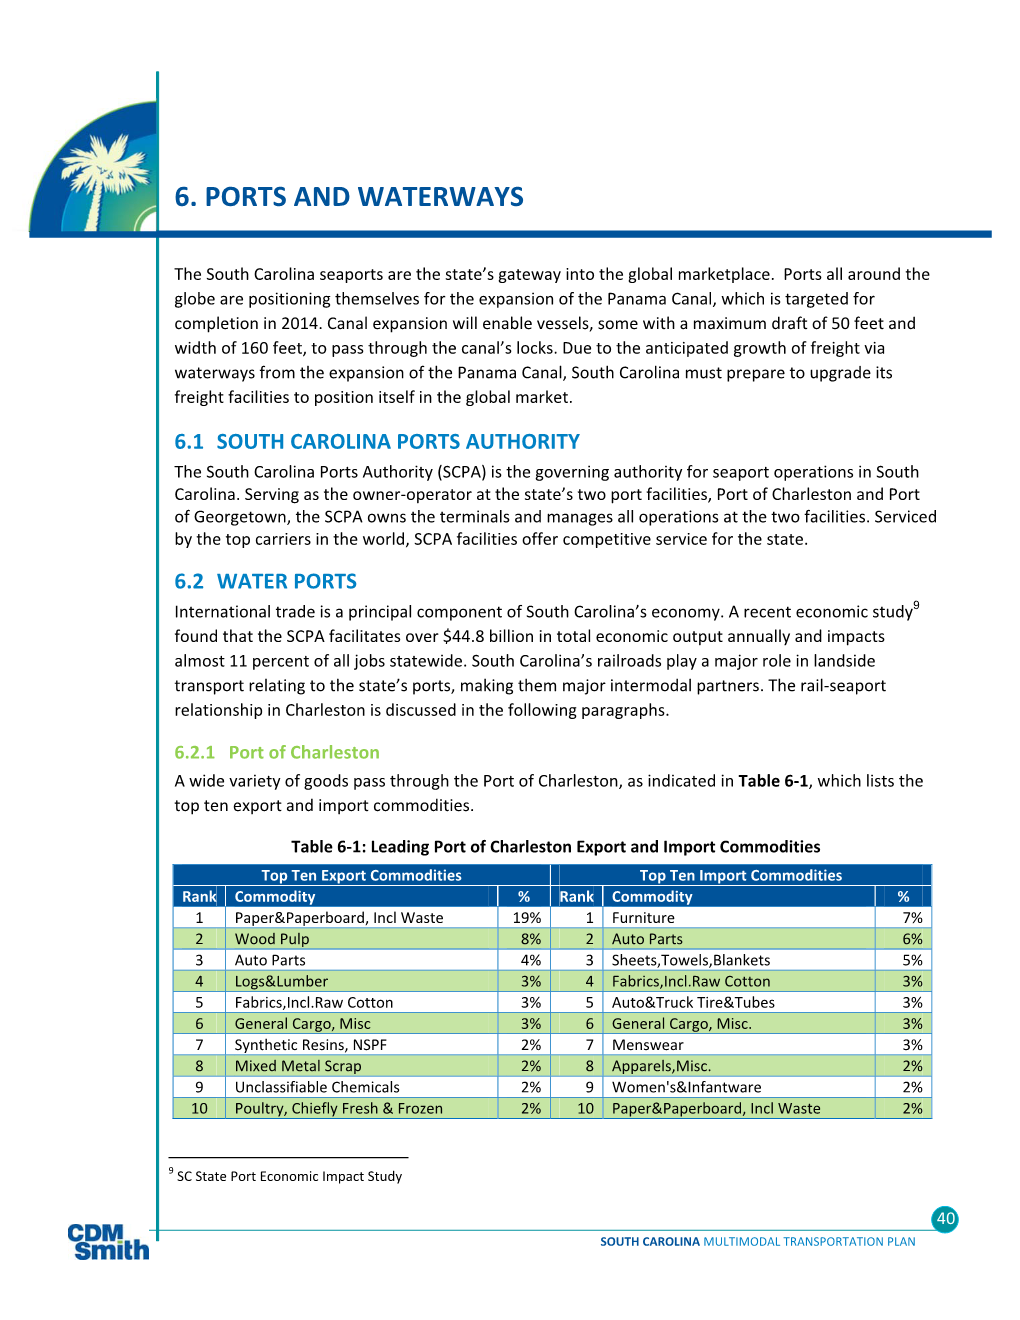 6. Ports and Waterways